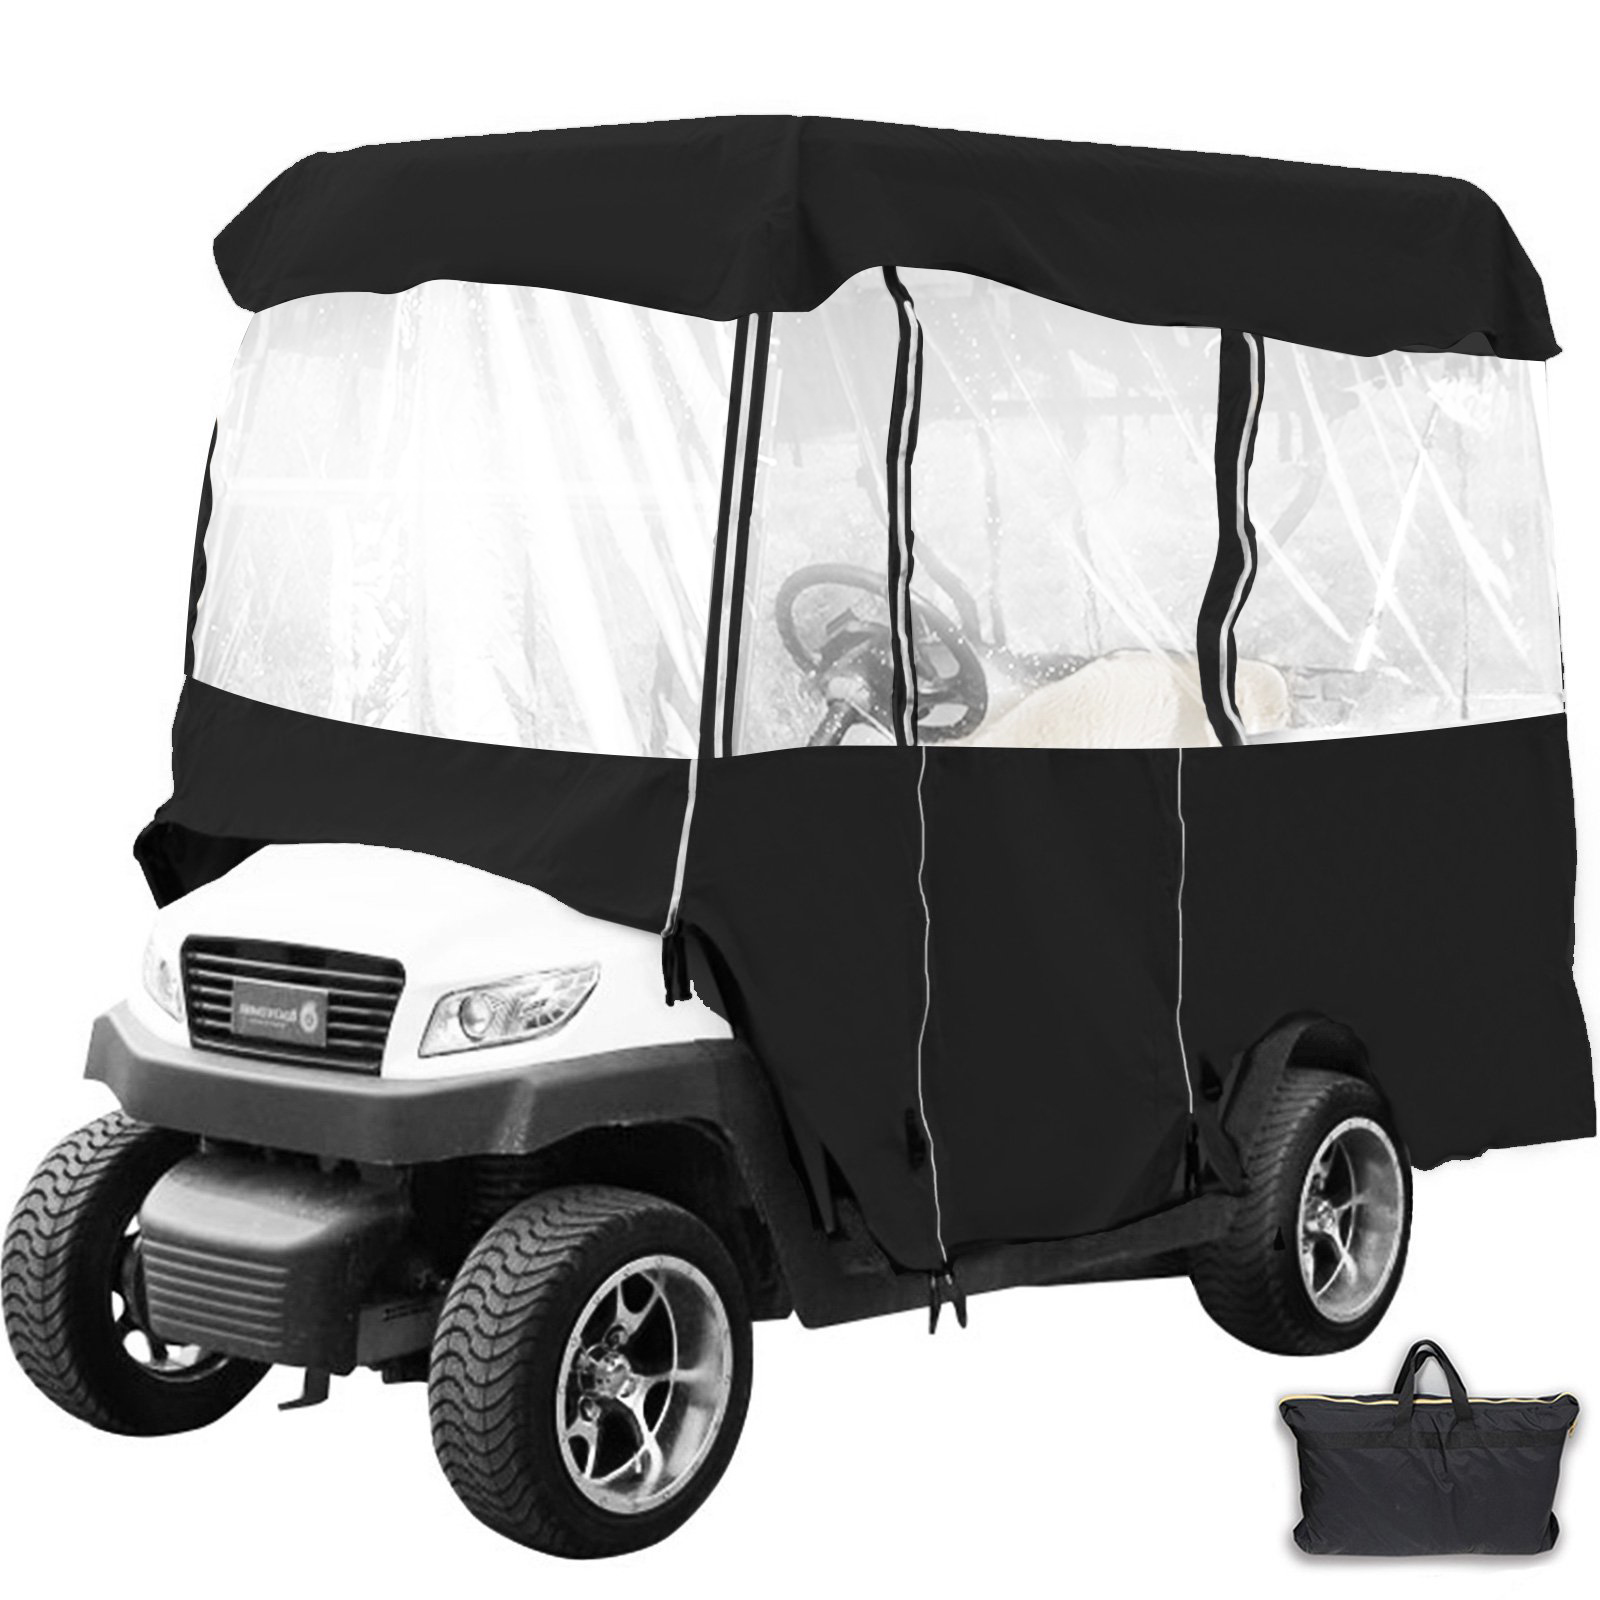 Golf Cart Cover 4 Passenger Waterproof Black Rain Cover Enclosure W/ Back Seat от Vevor Many GEOs